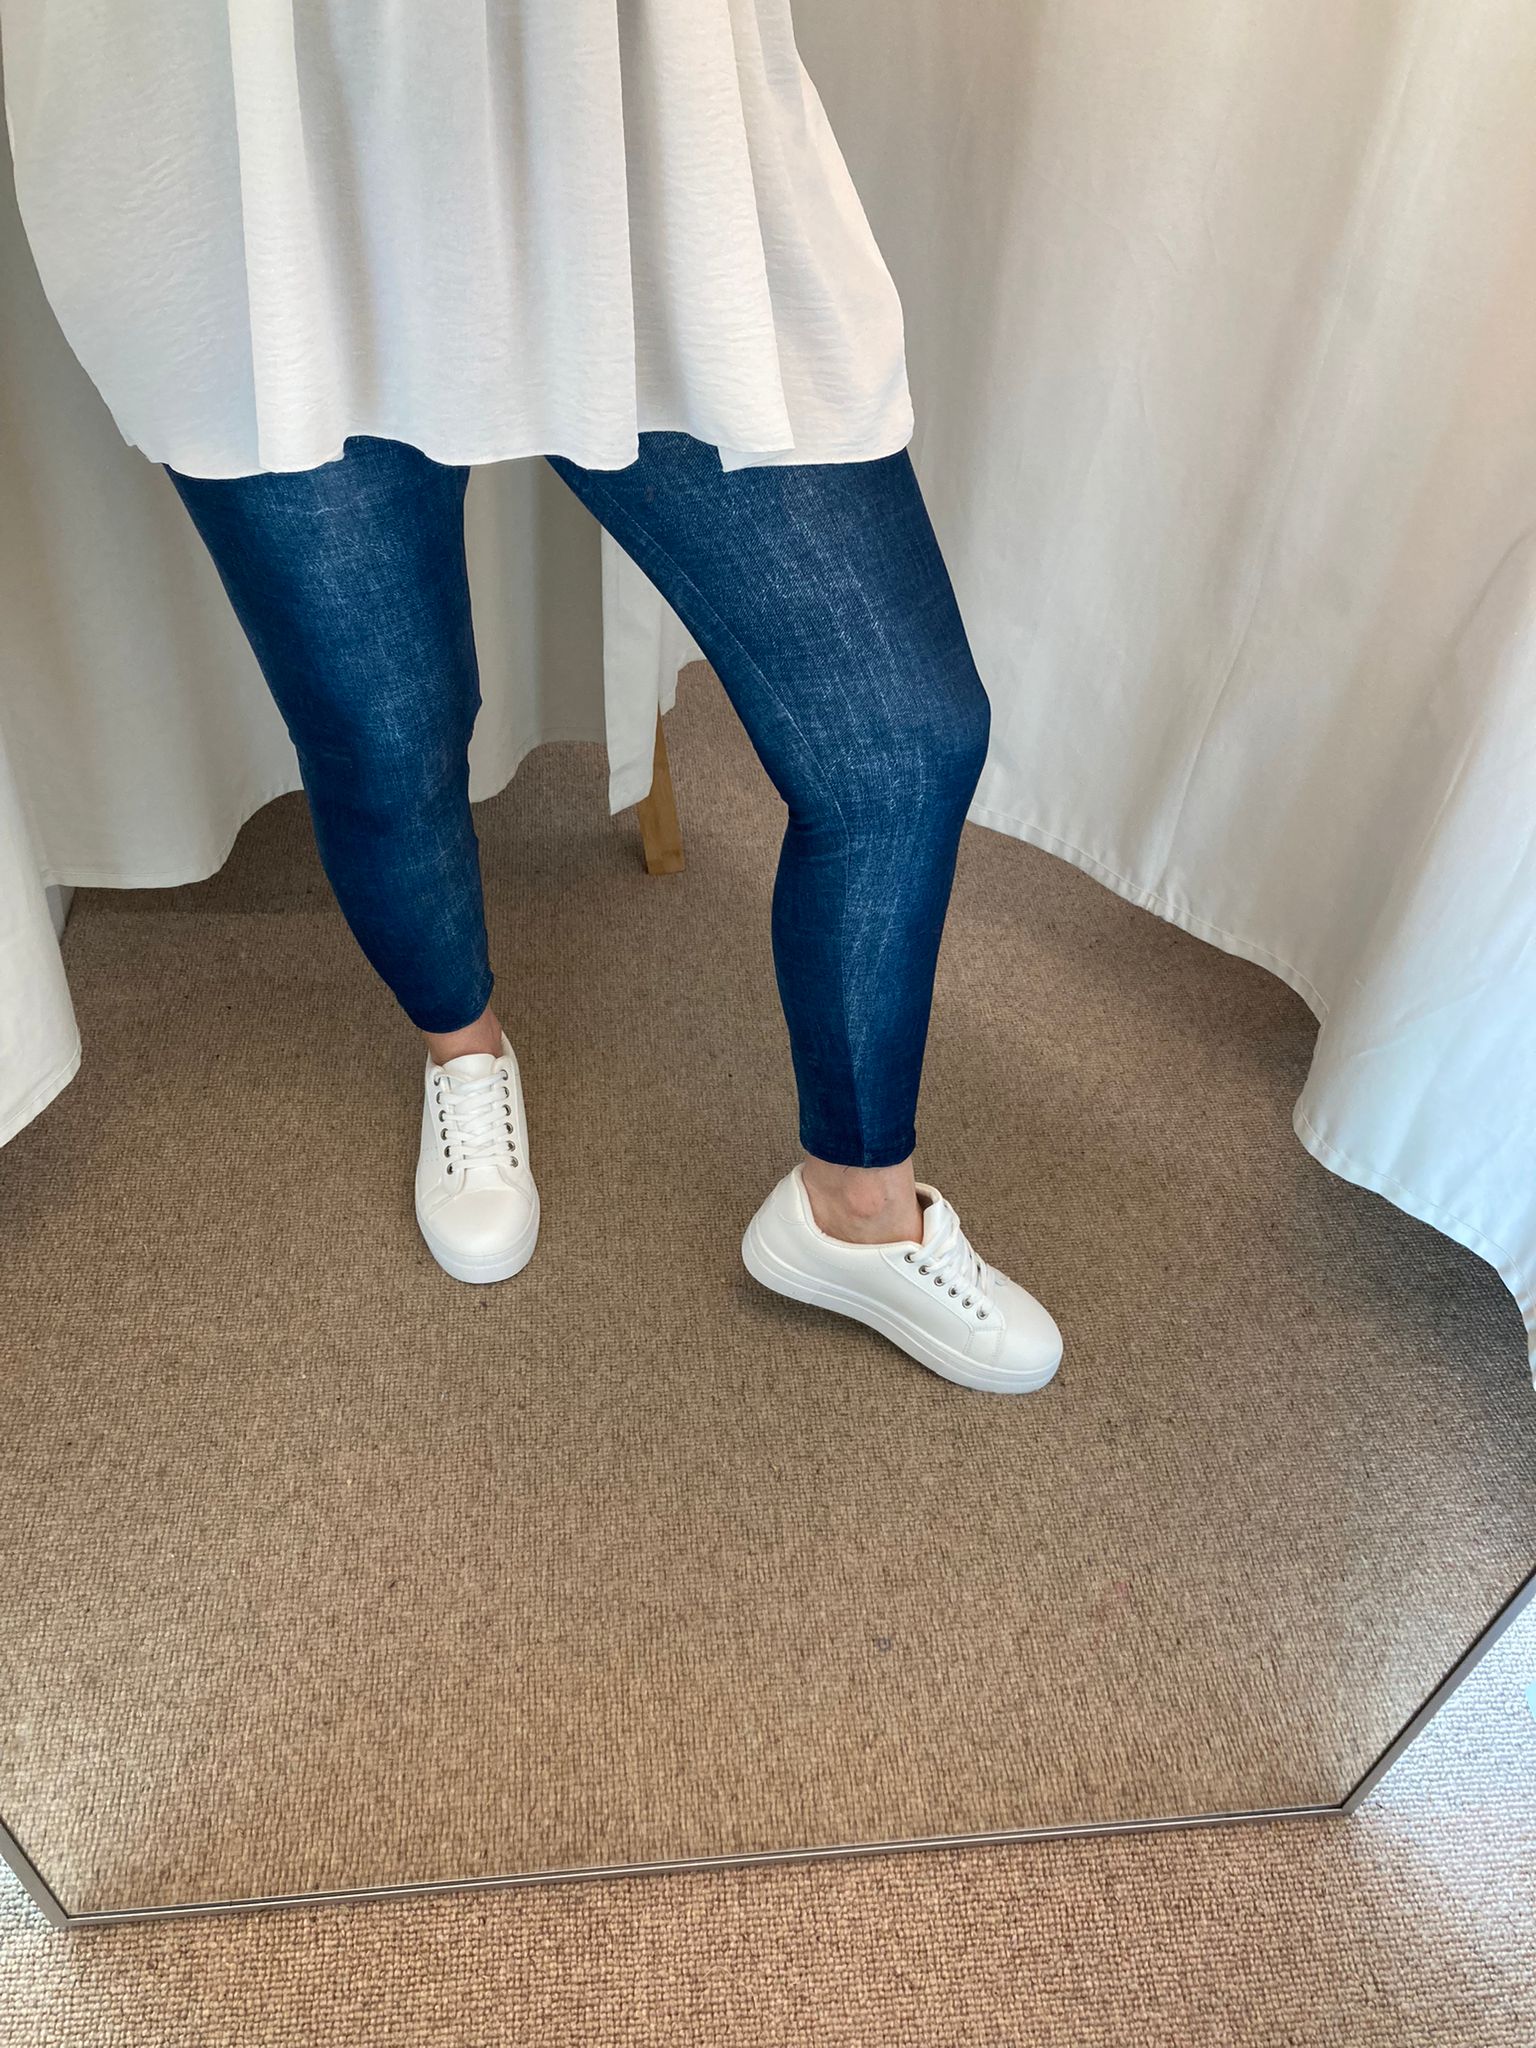 Leggings That Look Like Jeans -  UK